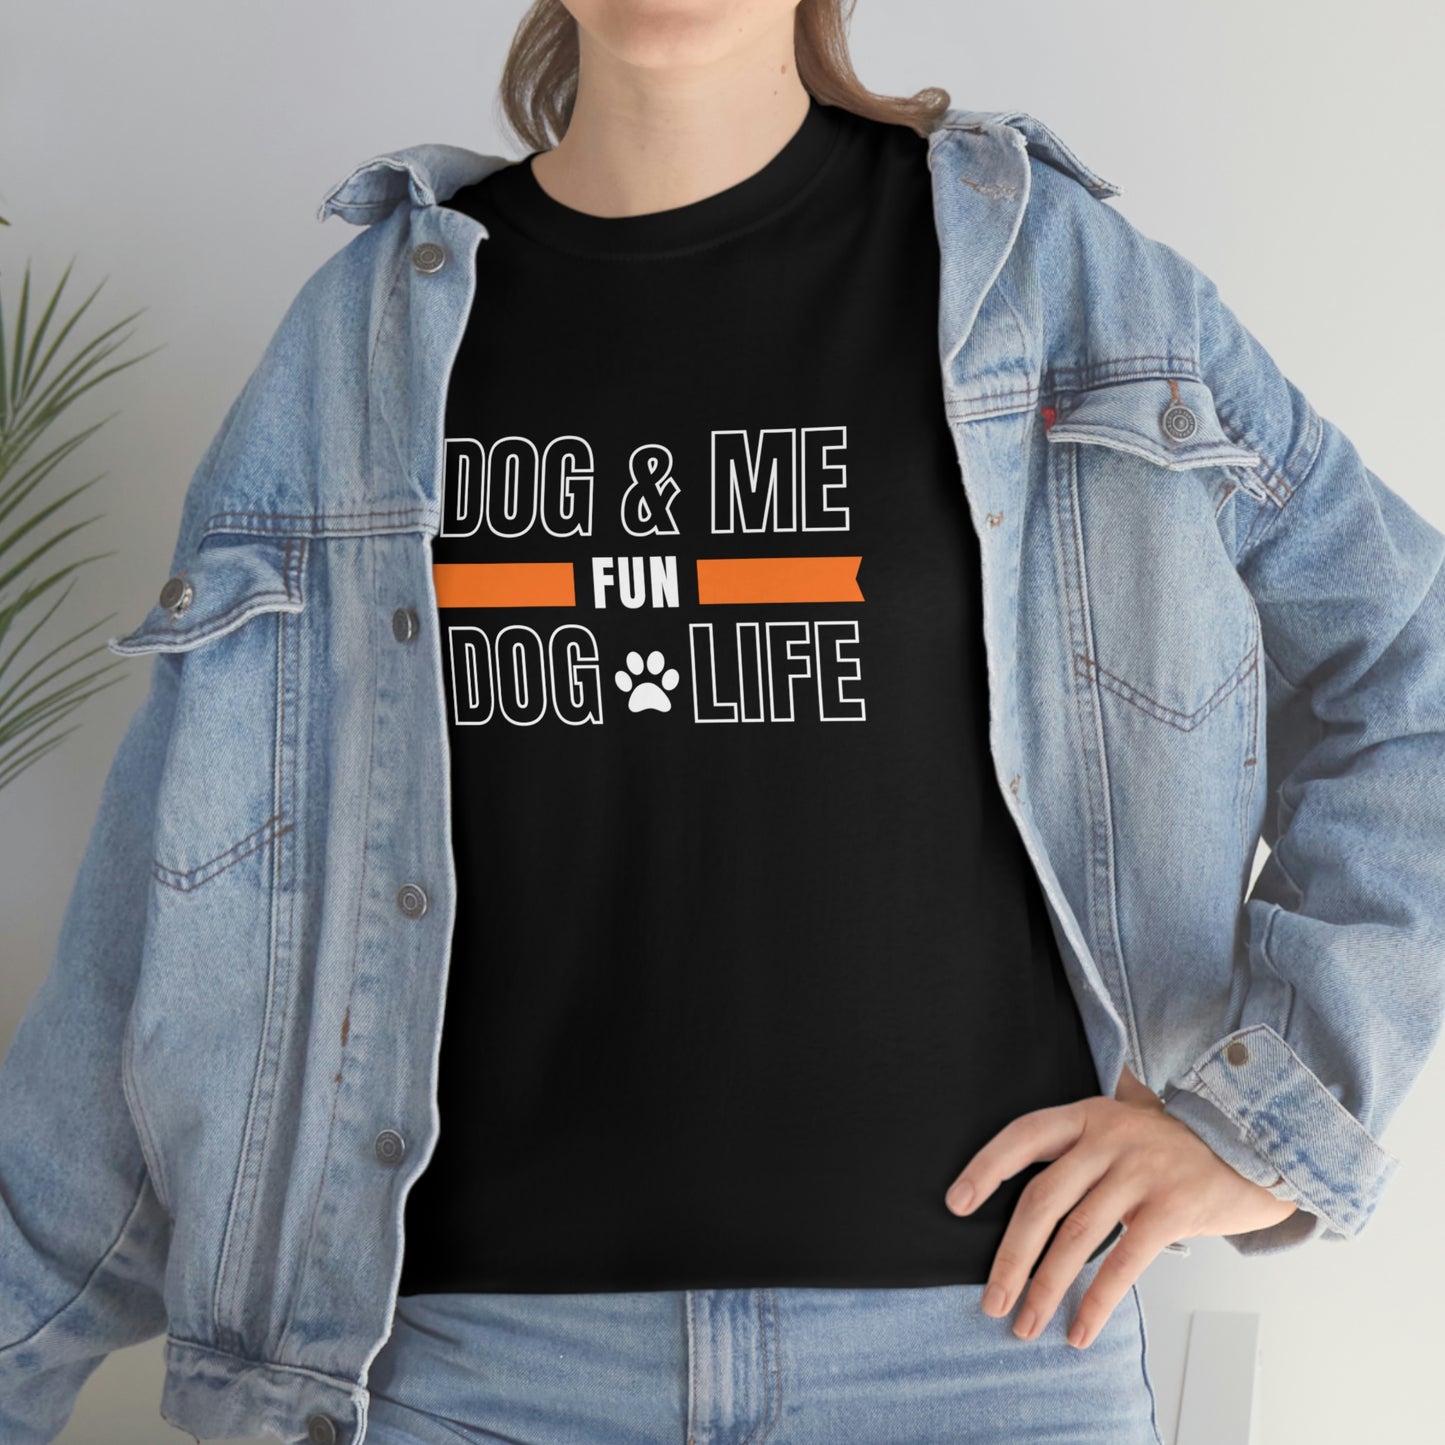 Dog & Me FUN Dog Life Black Graphic tee shirt